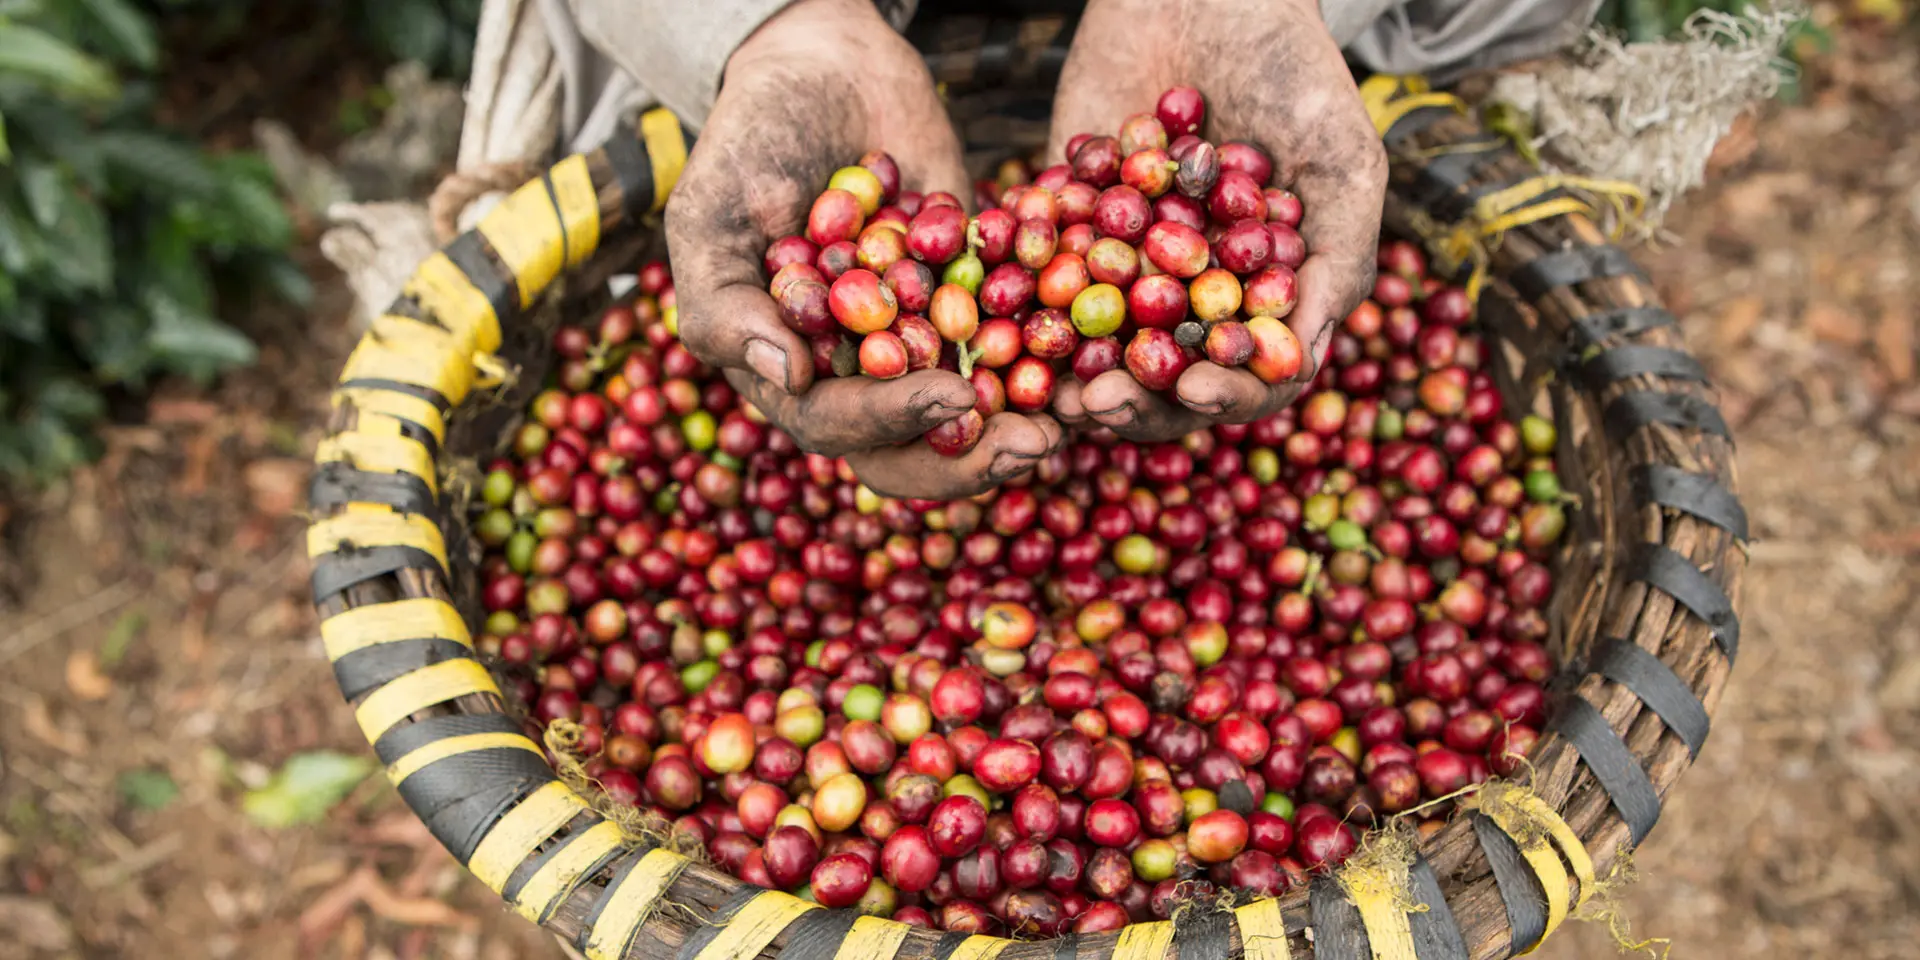 cultivo de café en costa rica - Dónde se produce el mejor café de Costa Rica